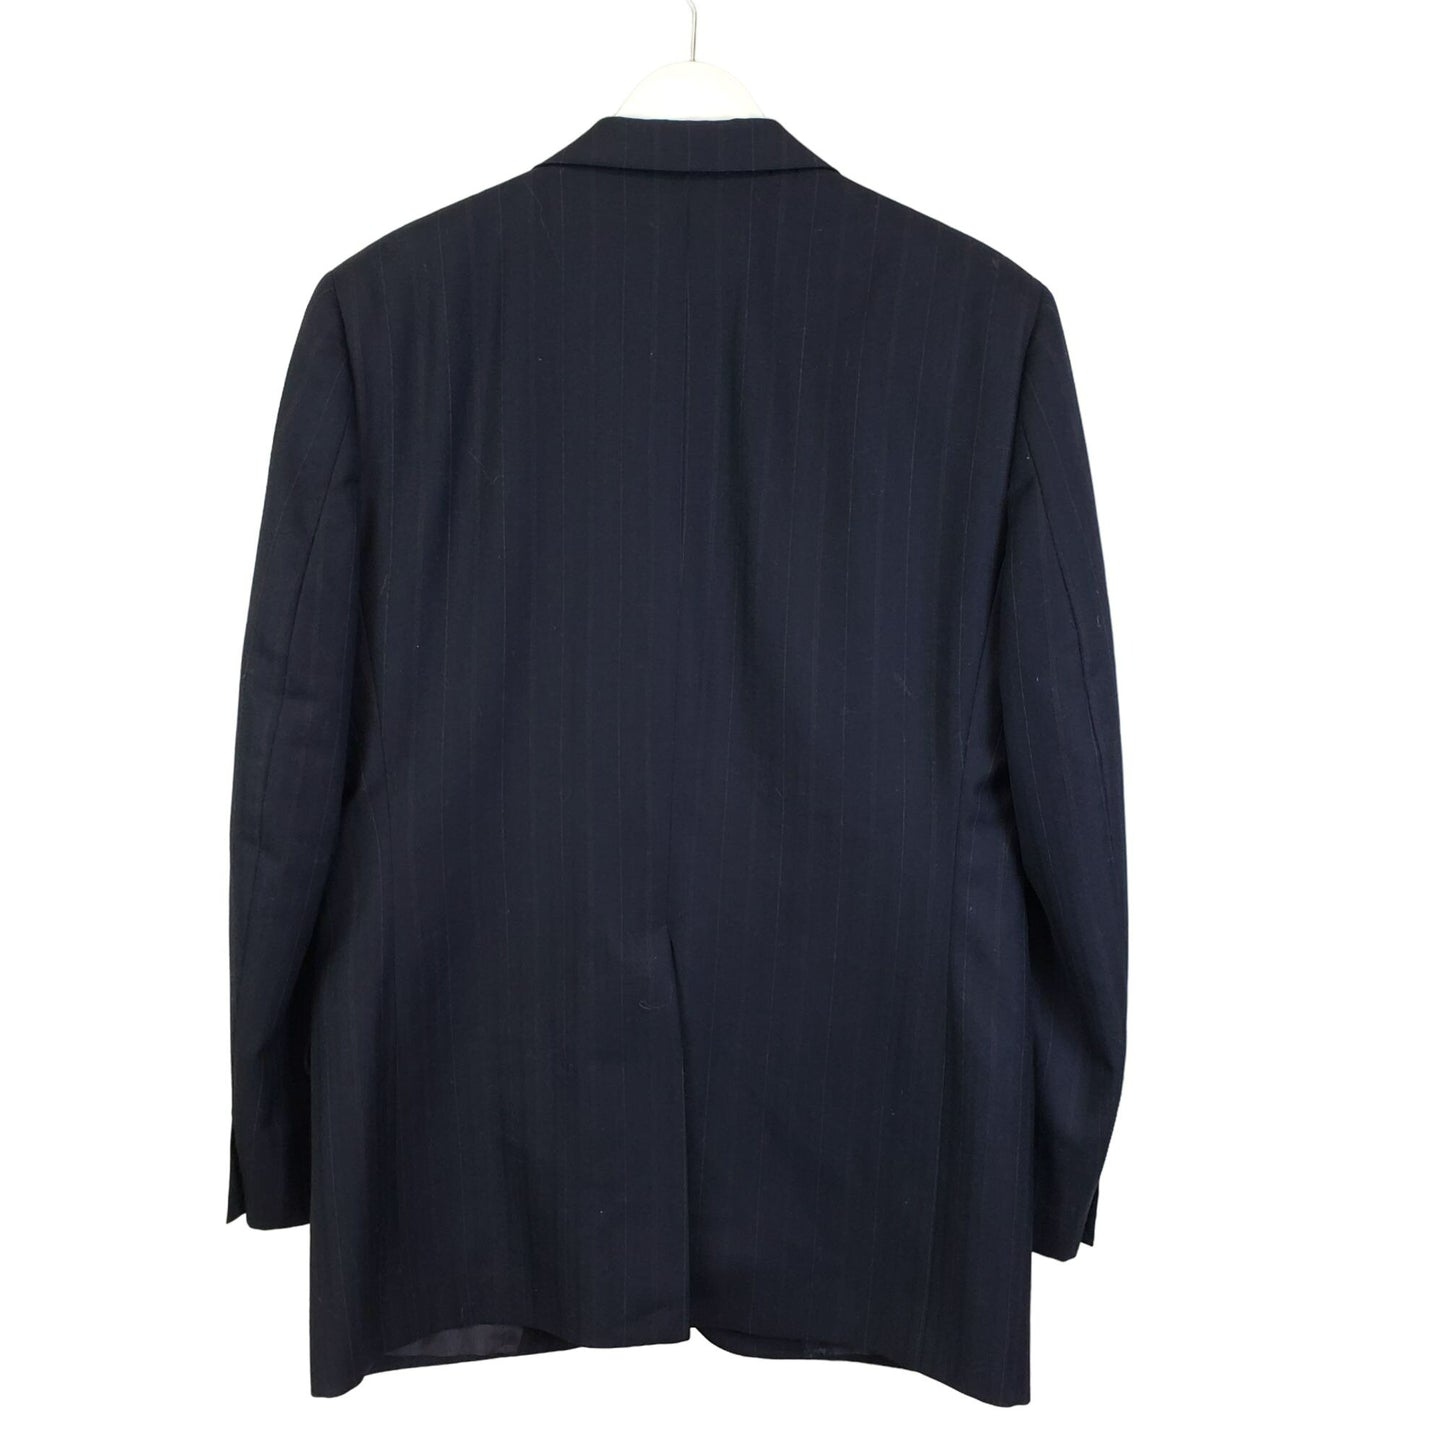 Burberry's Wool Pinstripe Two Button Blazer Jacket Size 43R Large (est)